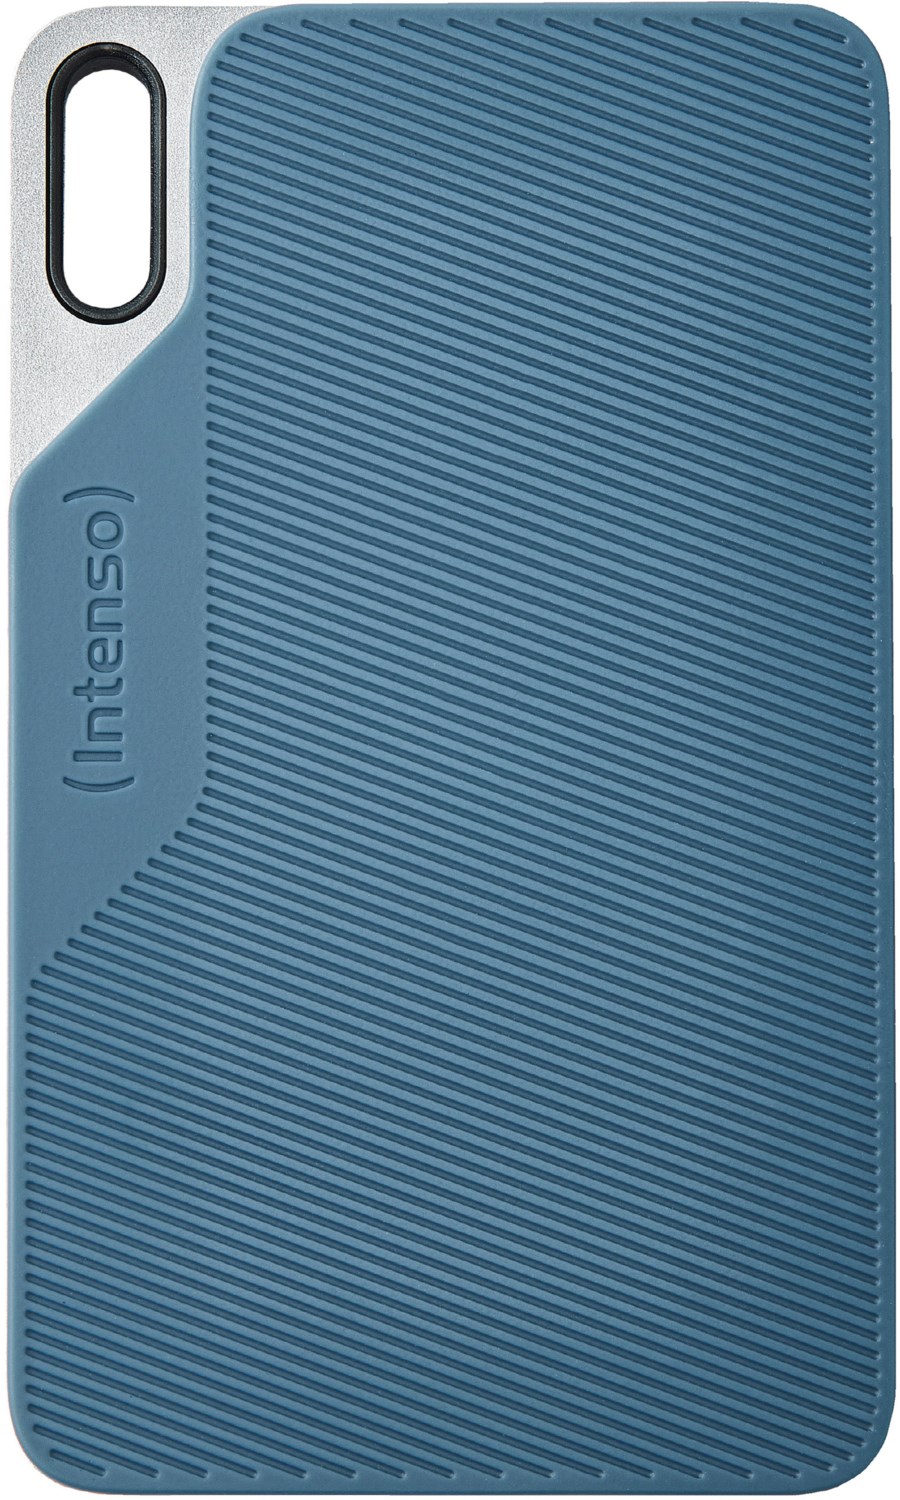 TX100 USB 3.2 Gen 1 (2TB) Externe SSD grau-blau von Intenso